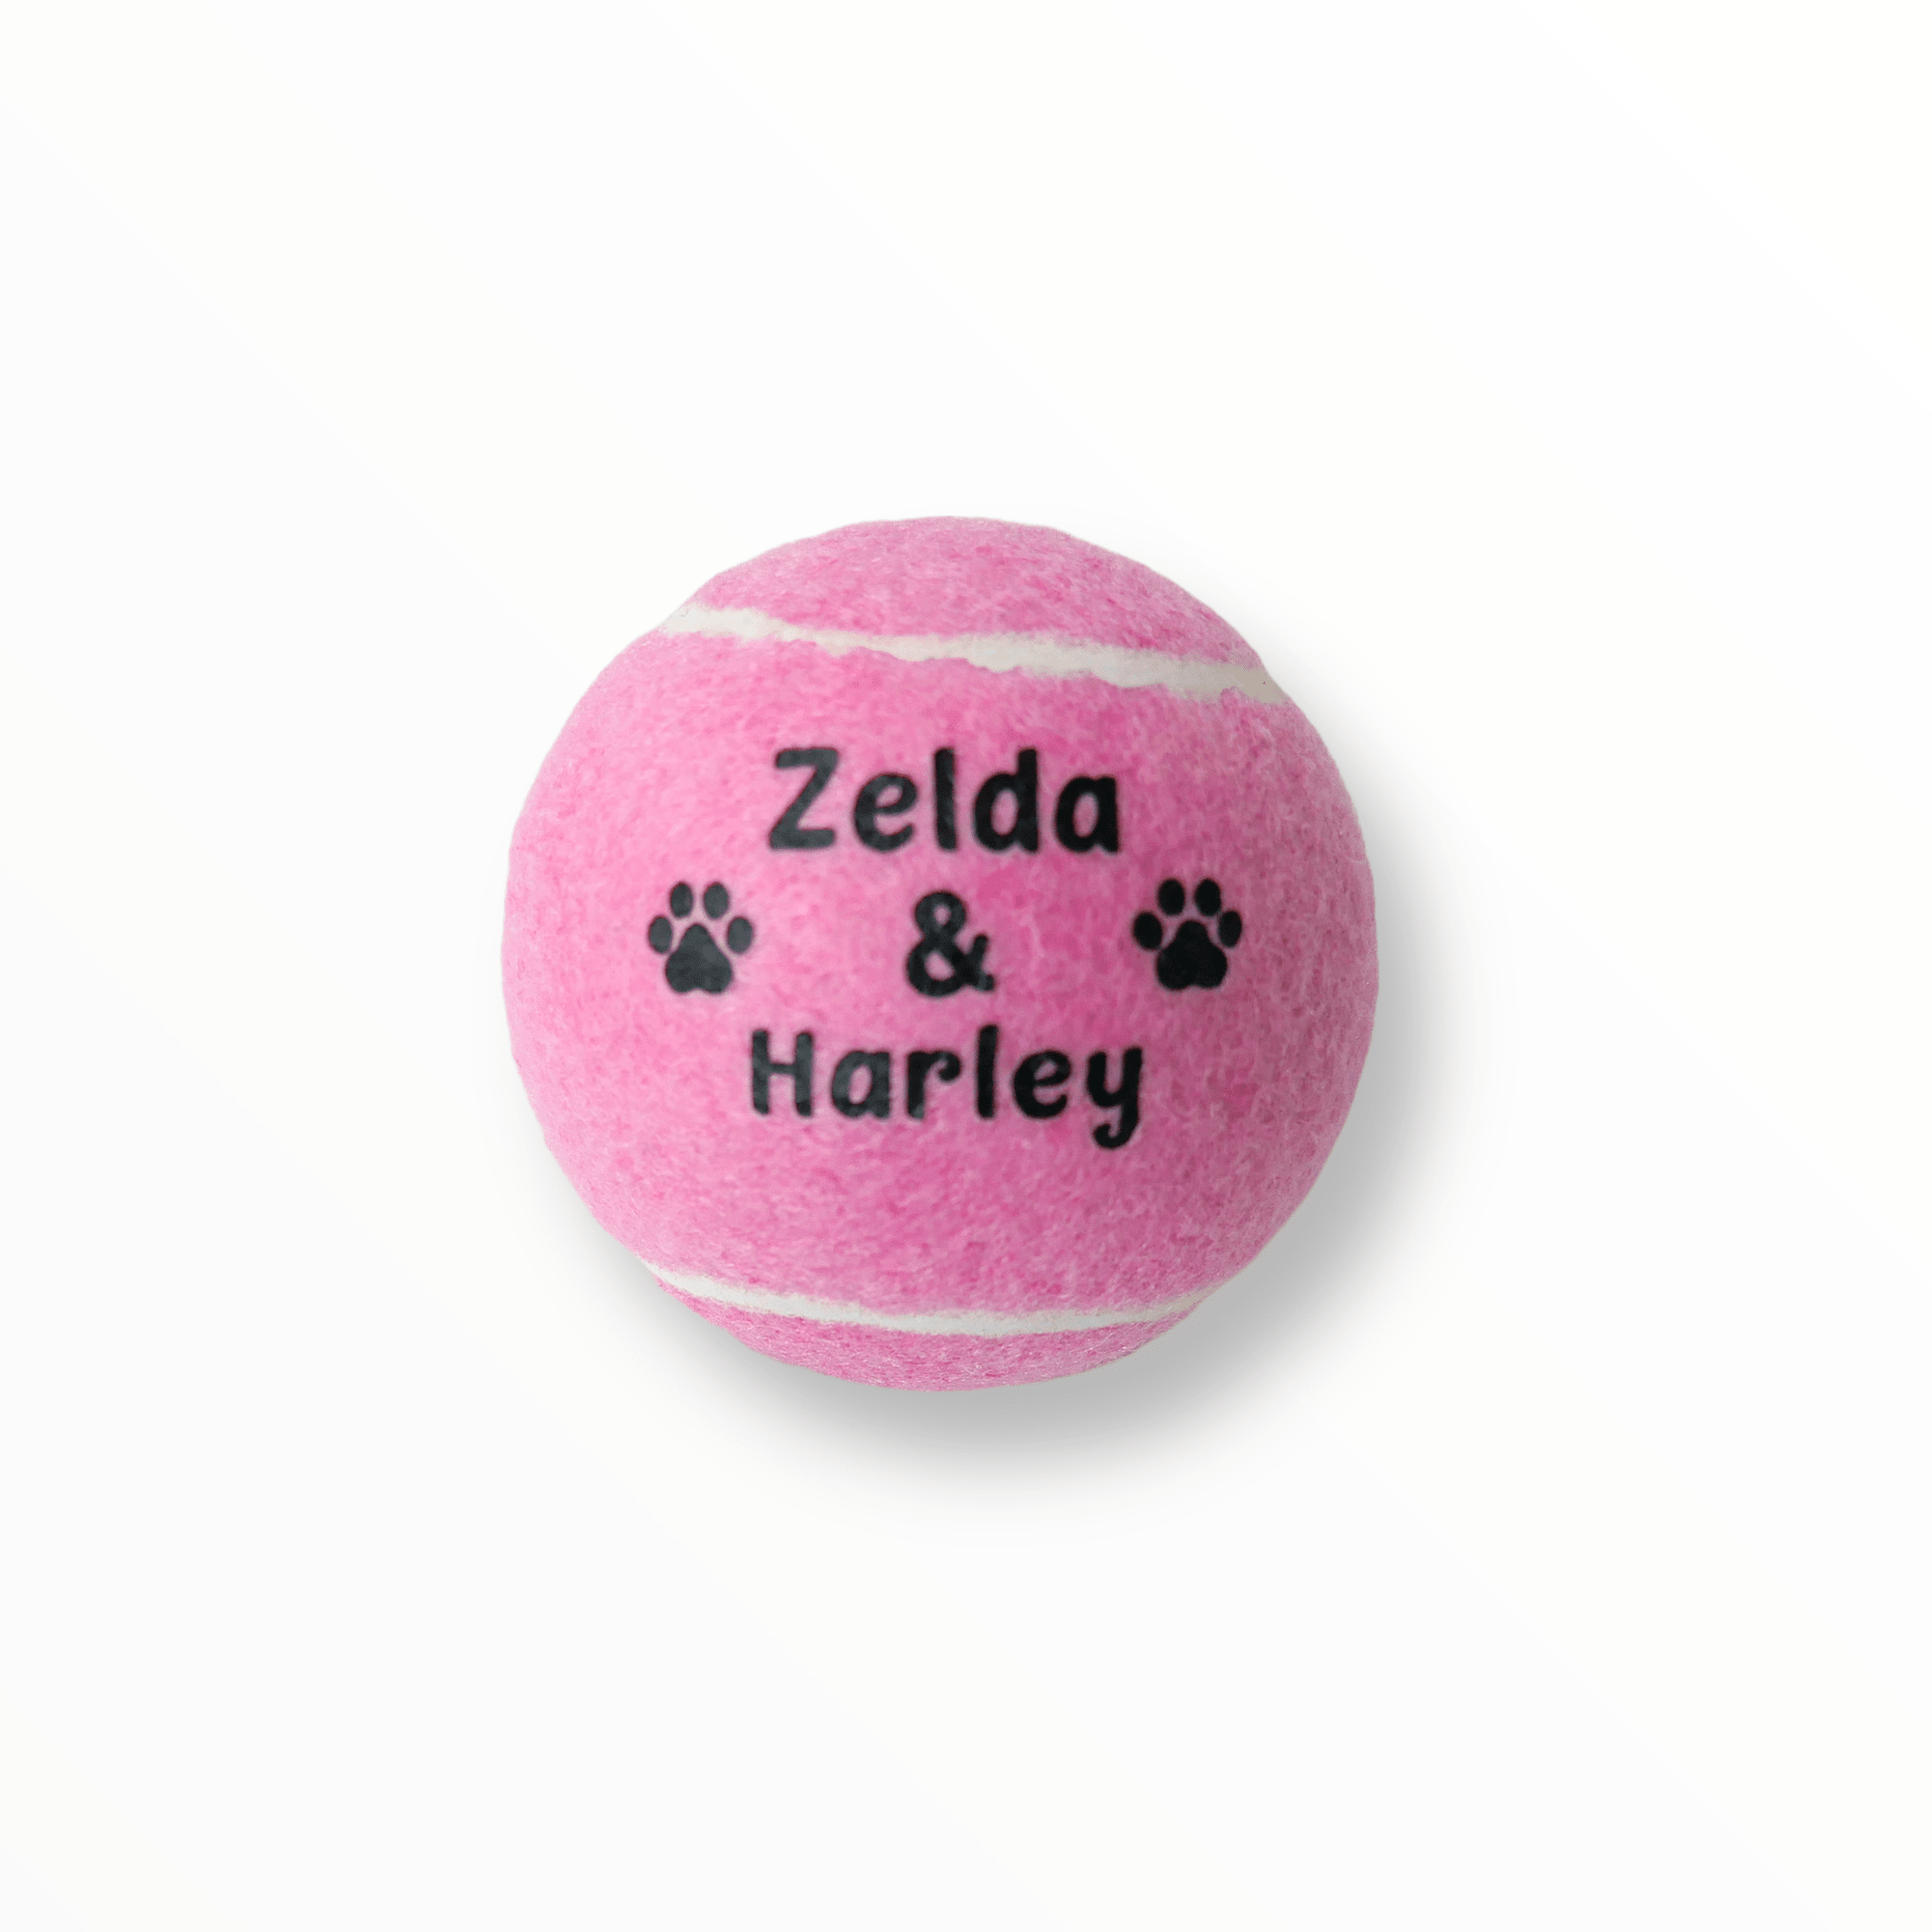 Zelda & Harley Tennis Ball Dog Tennis Ball